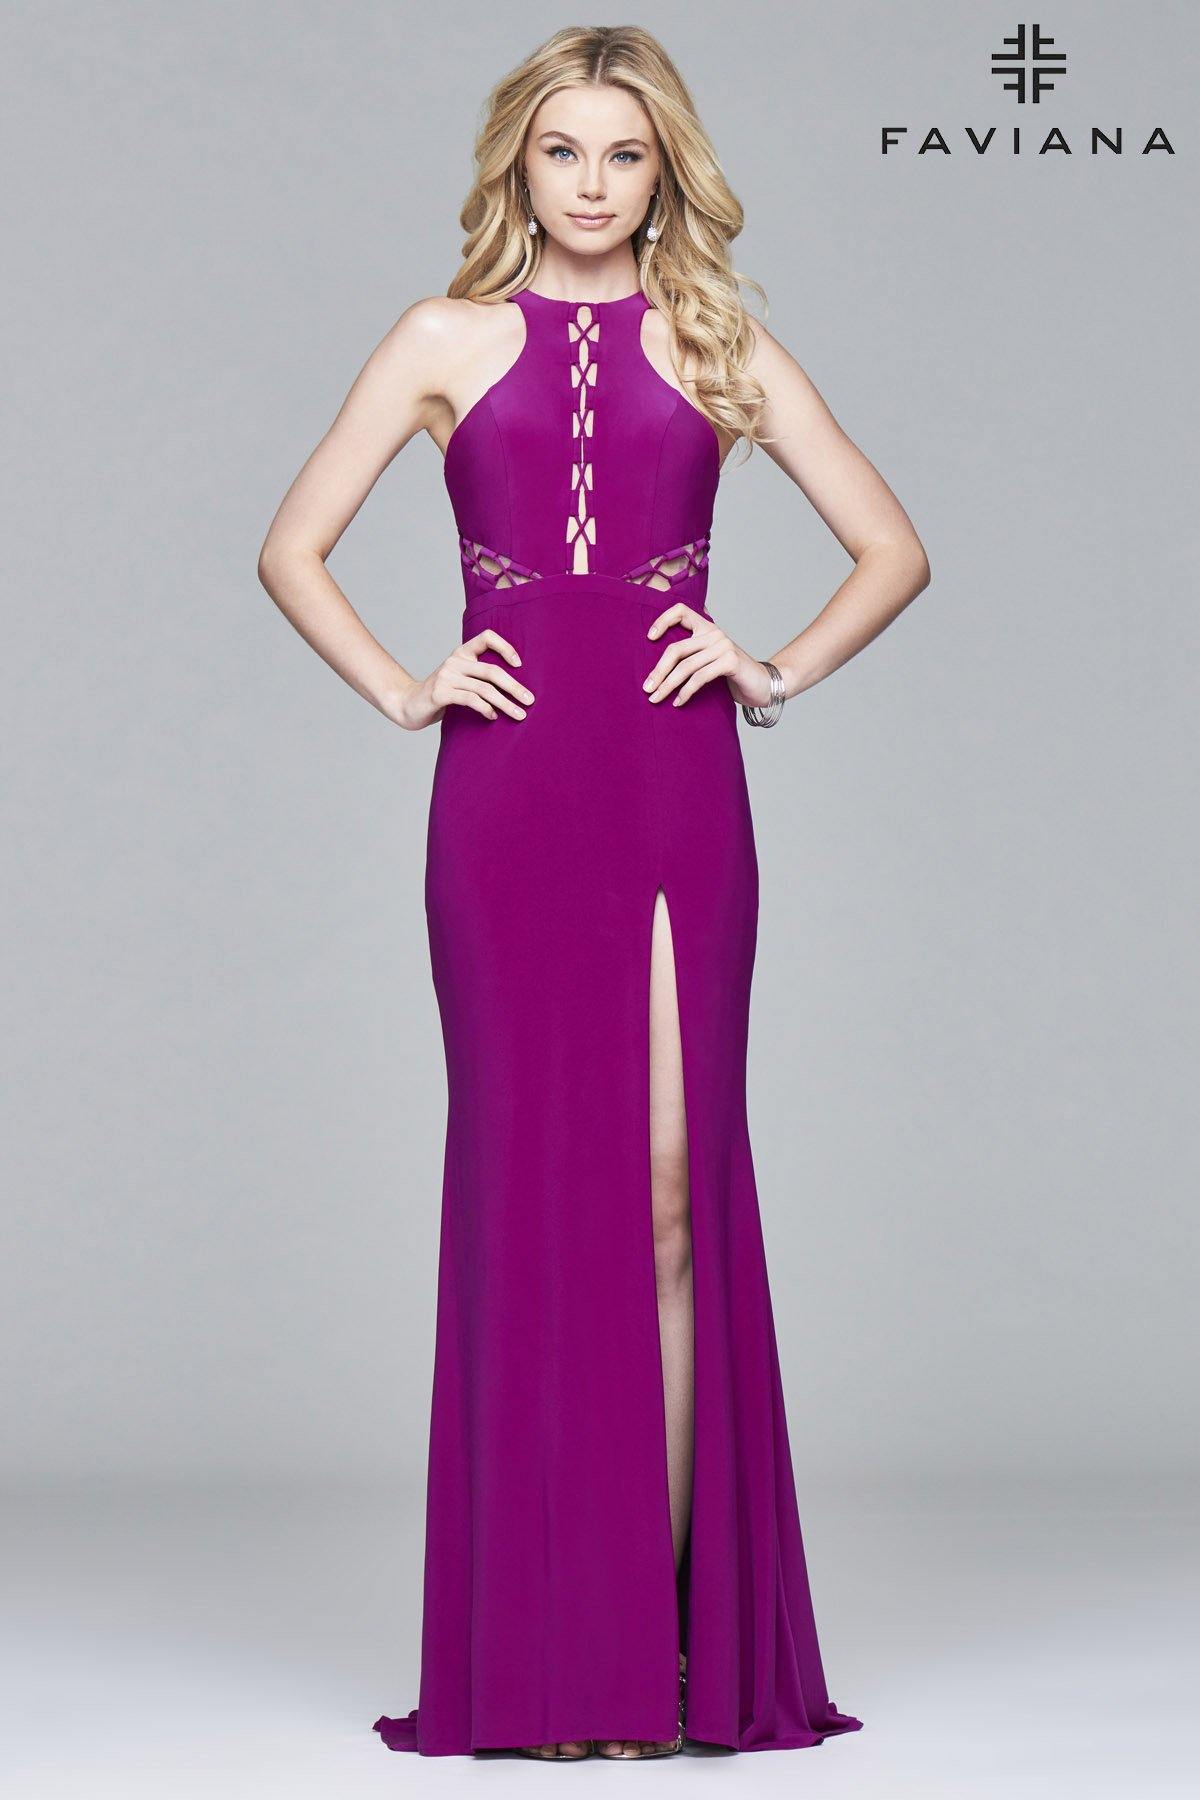 Faviana 7909 Long Formal Jersey Dress - The Dress Outlet Faviana